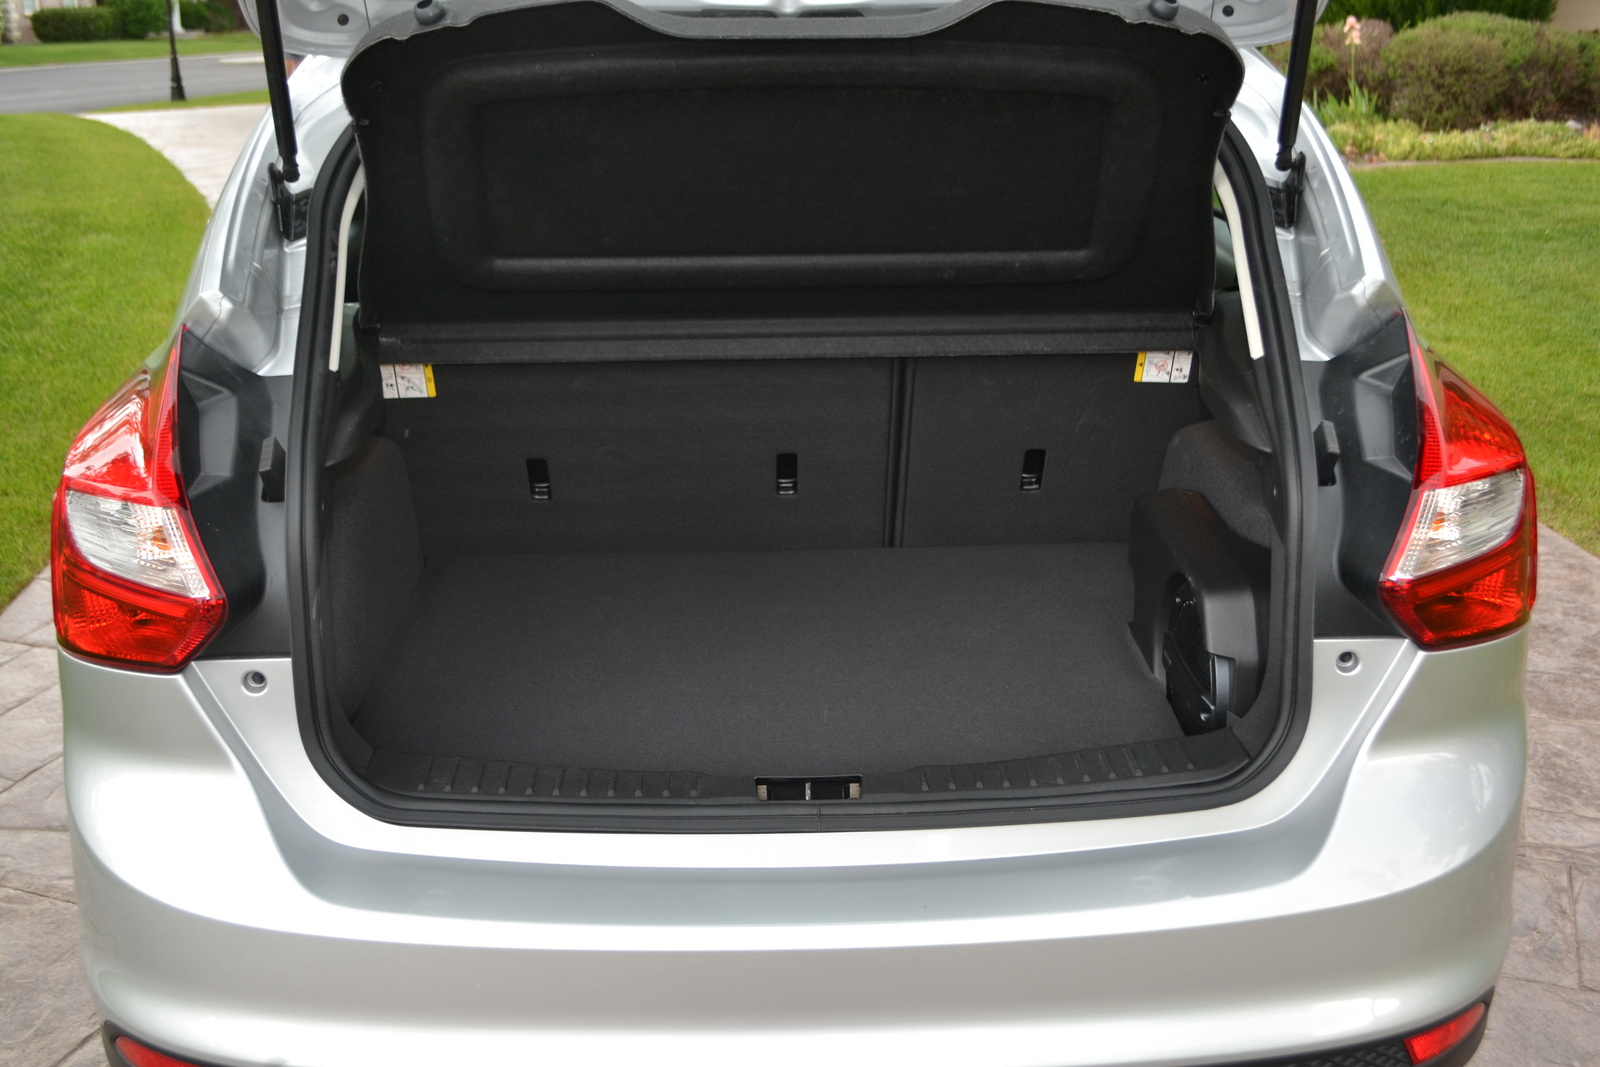 2012 Ford focus hatchback trunk dimensions #2